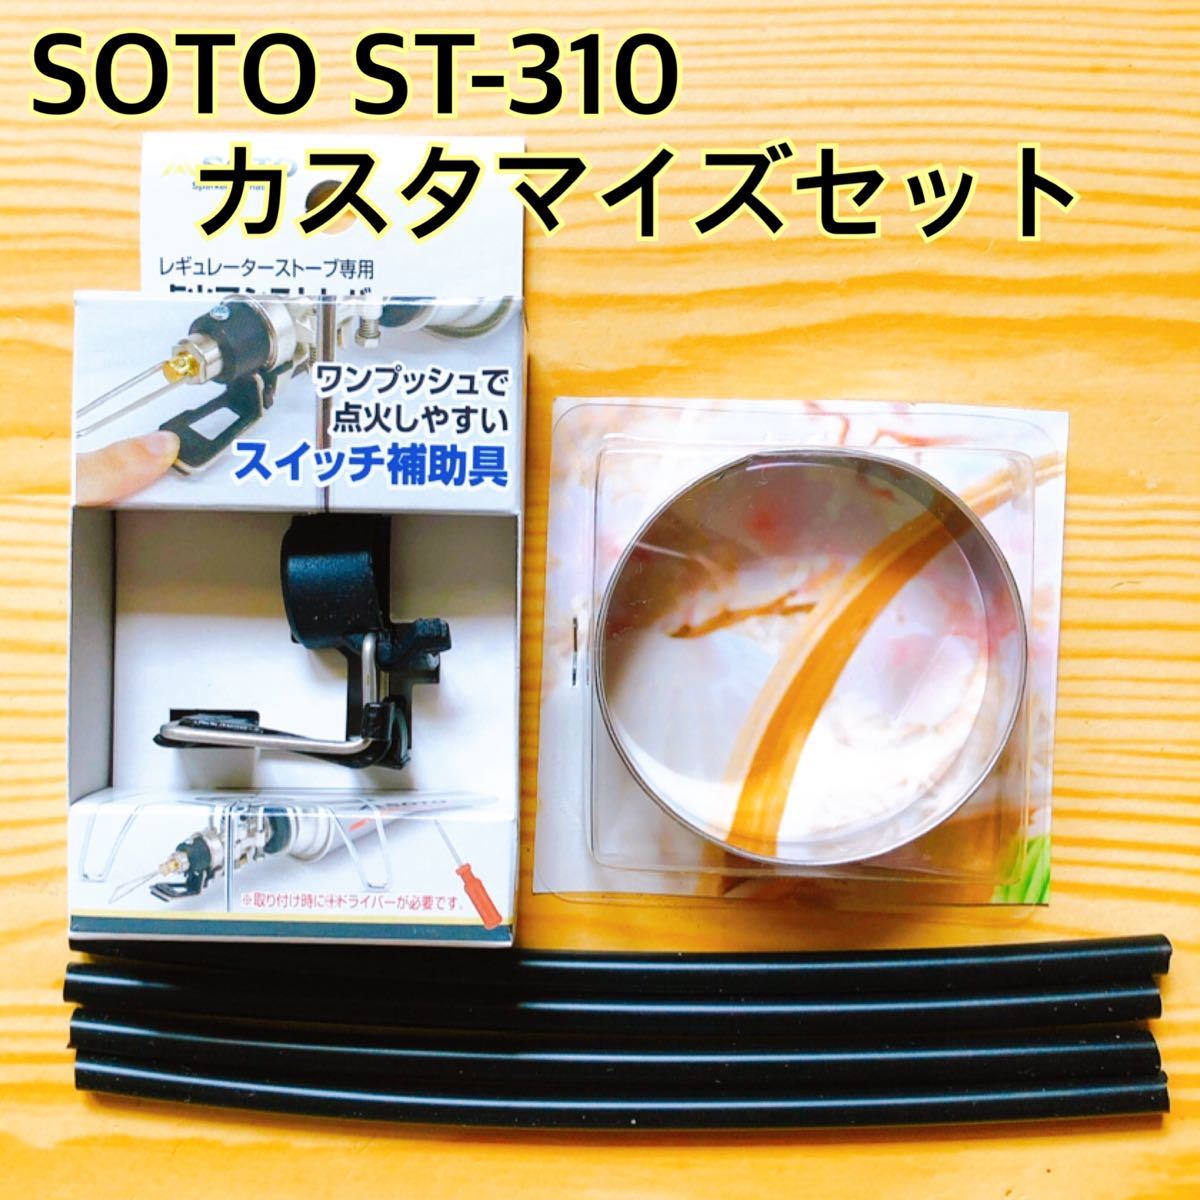 SOTO /ST-310用アシストレバー/防風/耐熱性チューブ/3点 新富士バーナー ソロキャンプ アウトドア キャンプ 